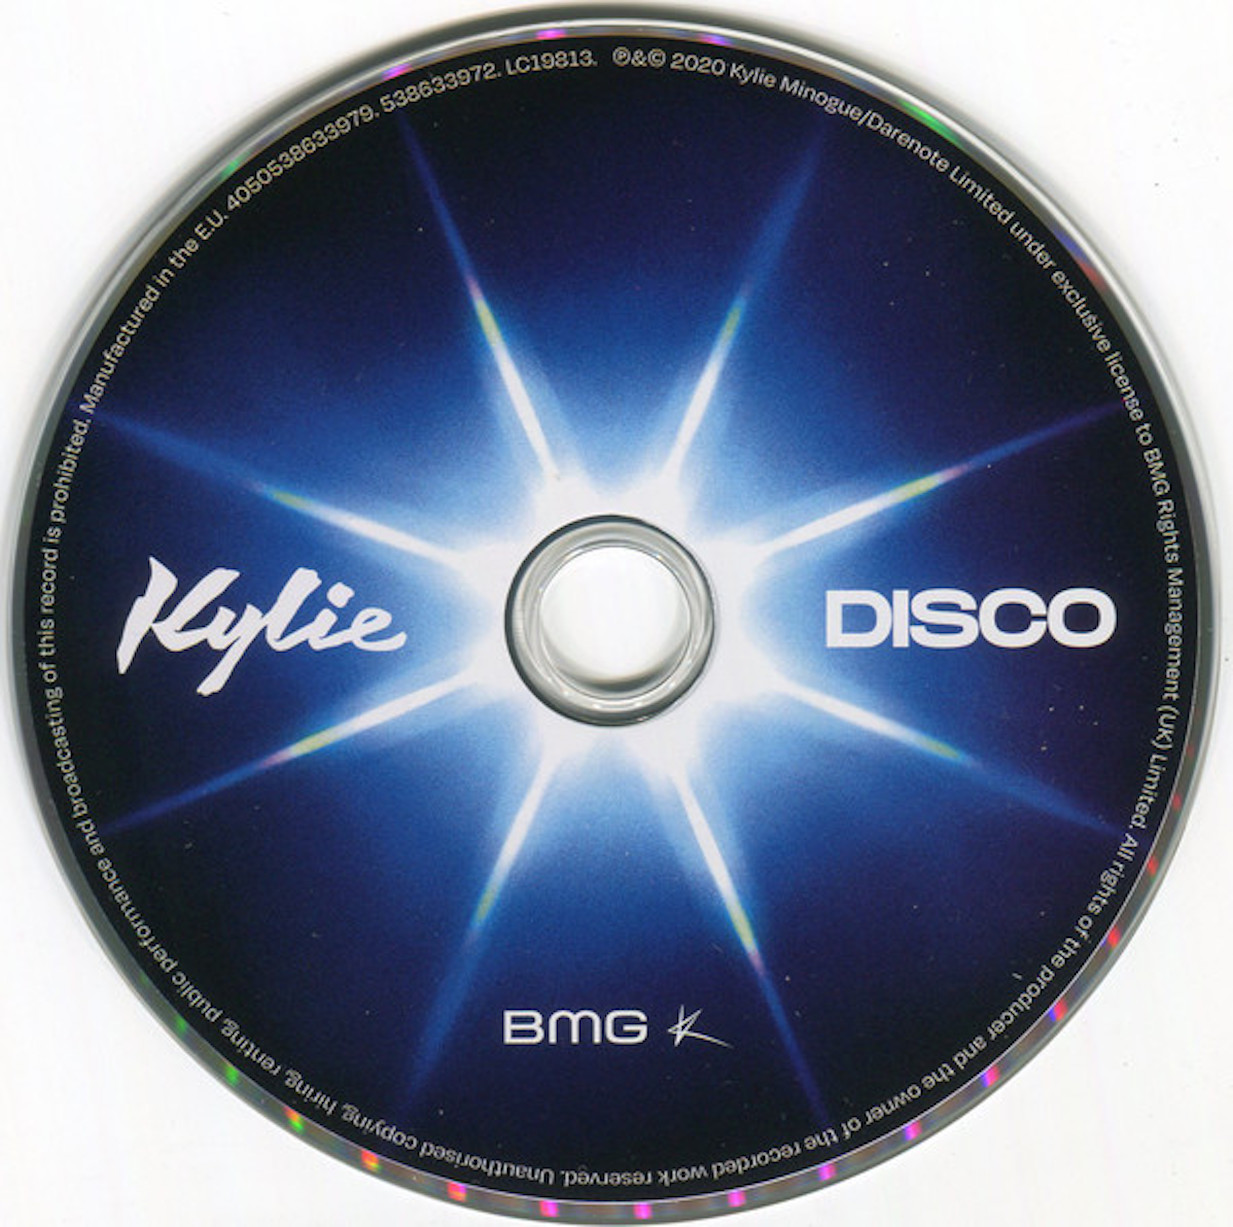 Minogue kylie disco. Kylie Minogue Disco 2020. Kylie Minogue - Disco ' 2020 CD Covers. Диско компакт диск.